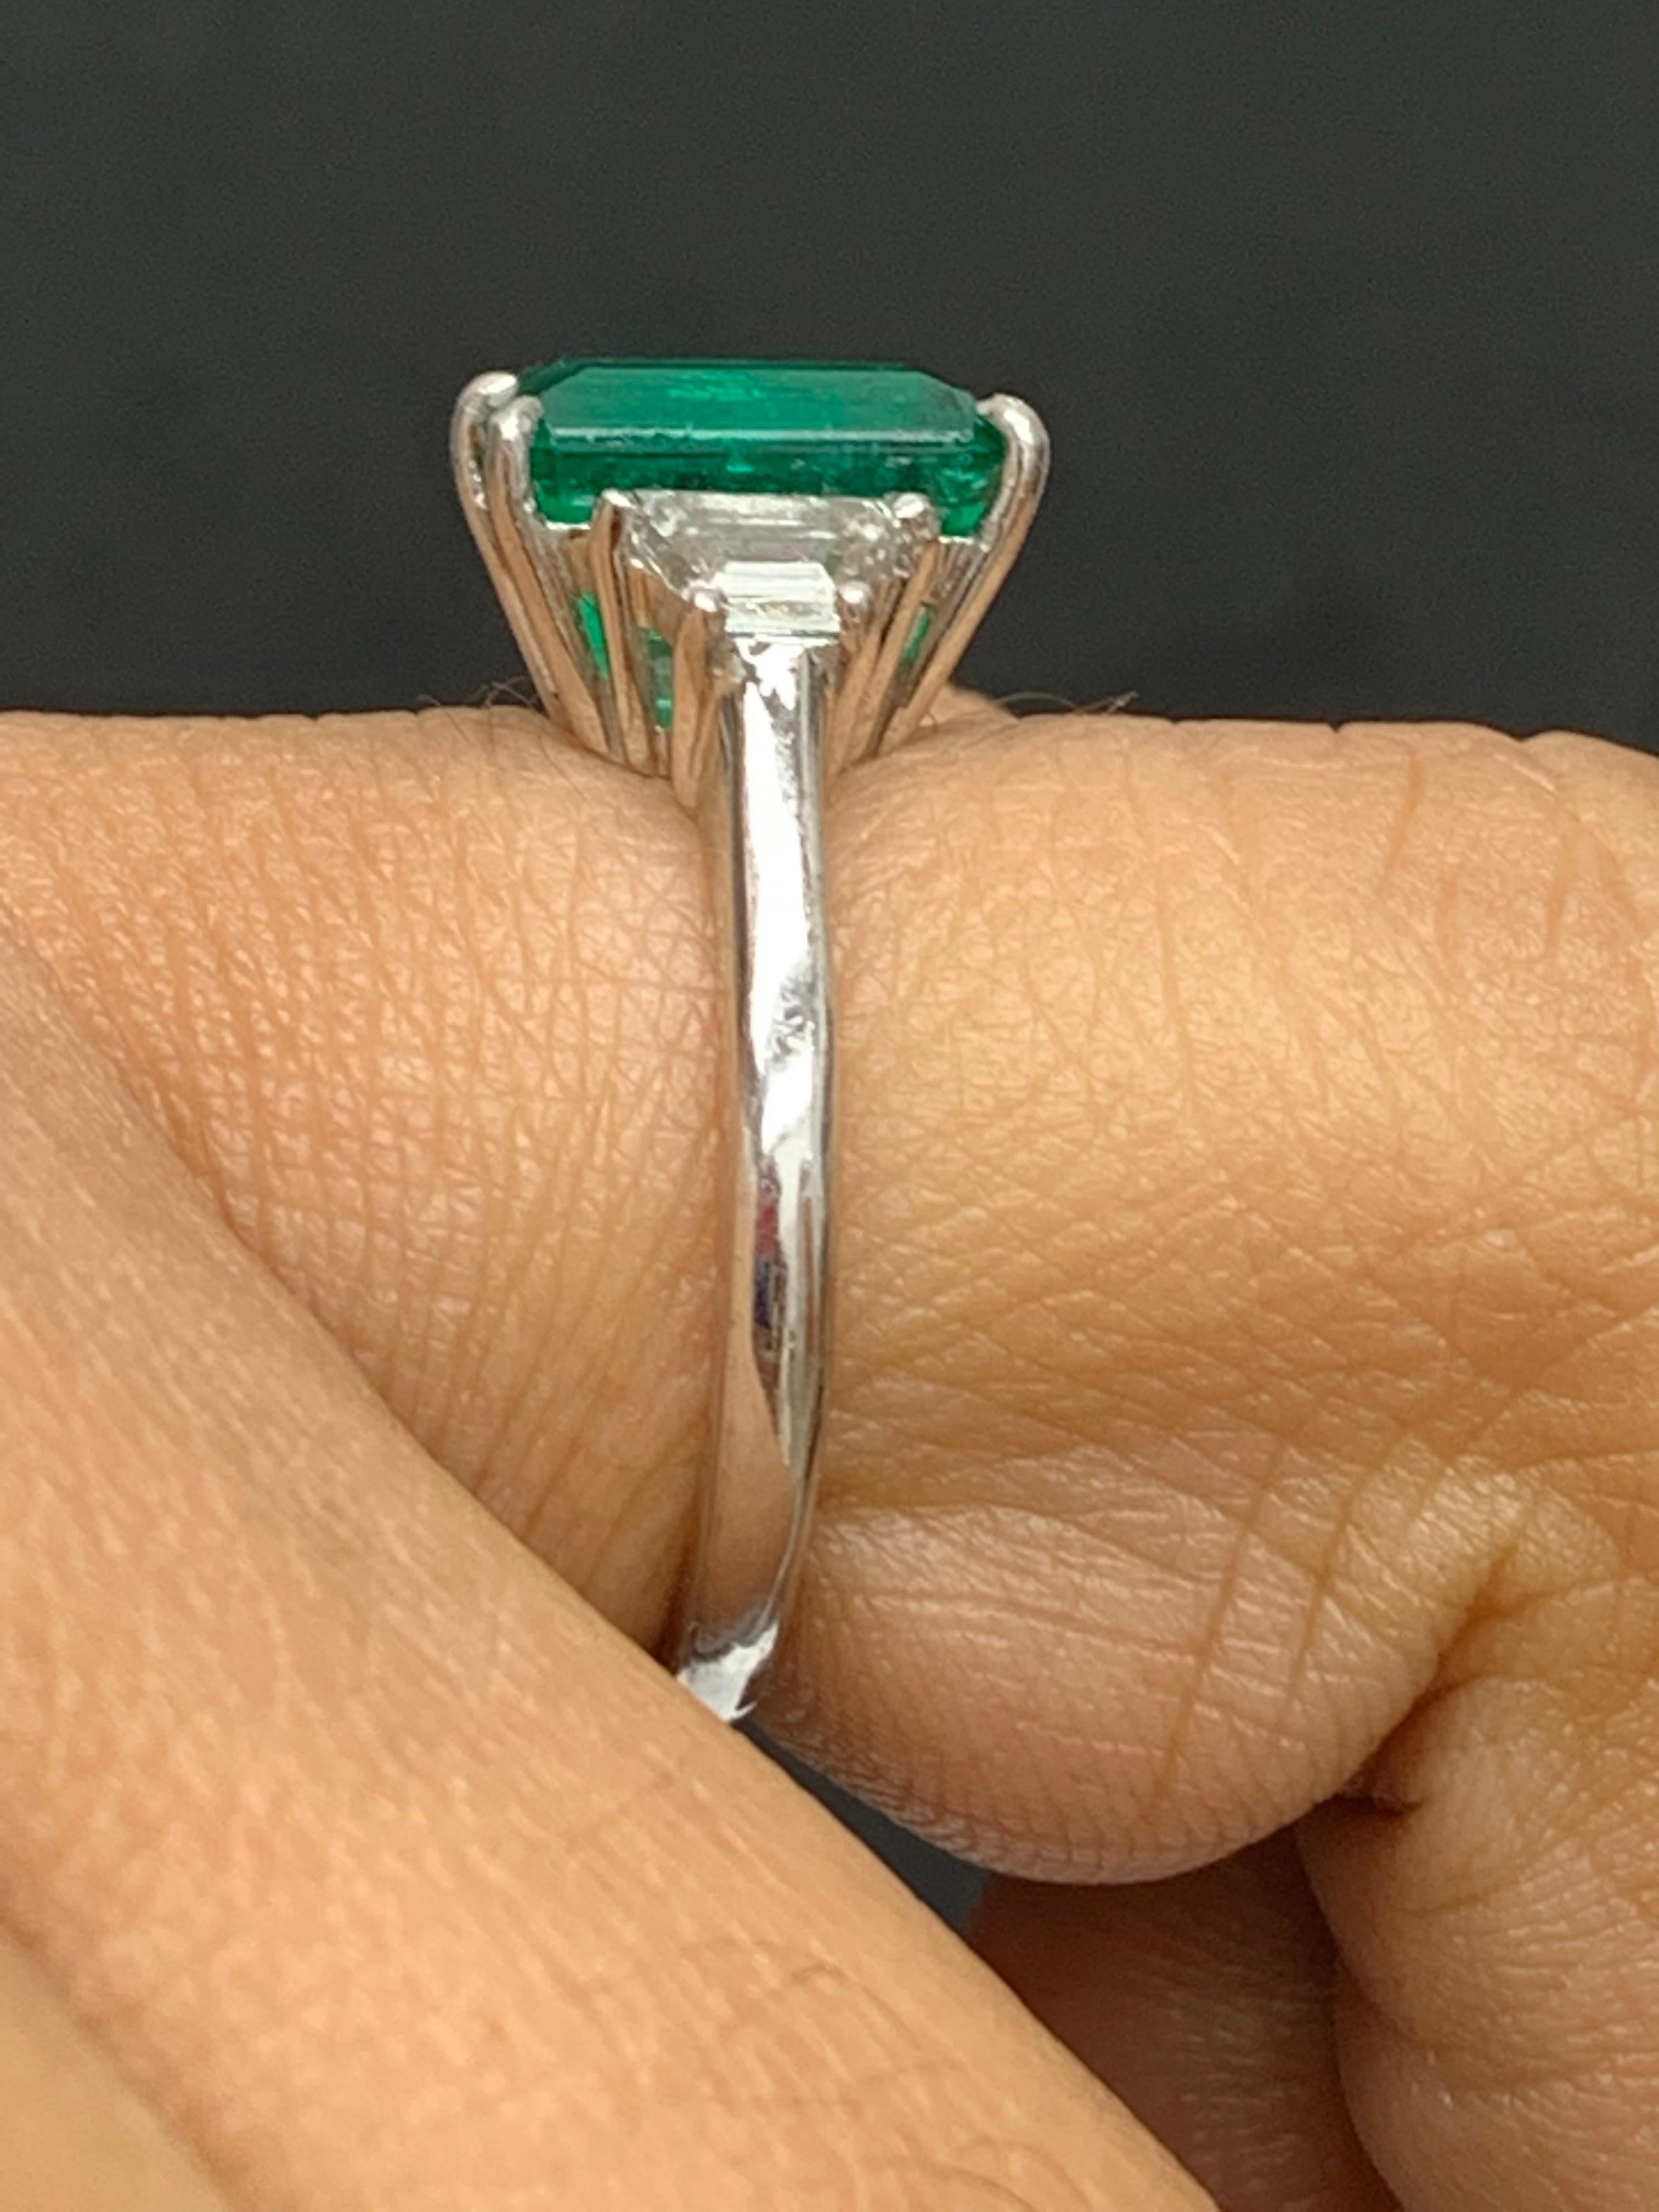 Certified 2.08 Carat Emerald Cut Emerald Diamond Ring in Platinum For Sale 4